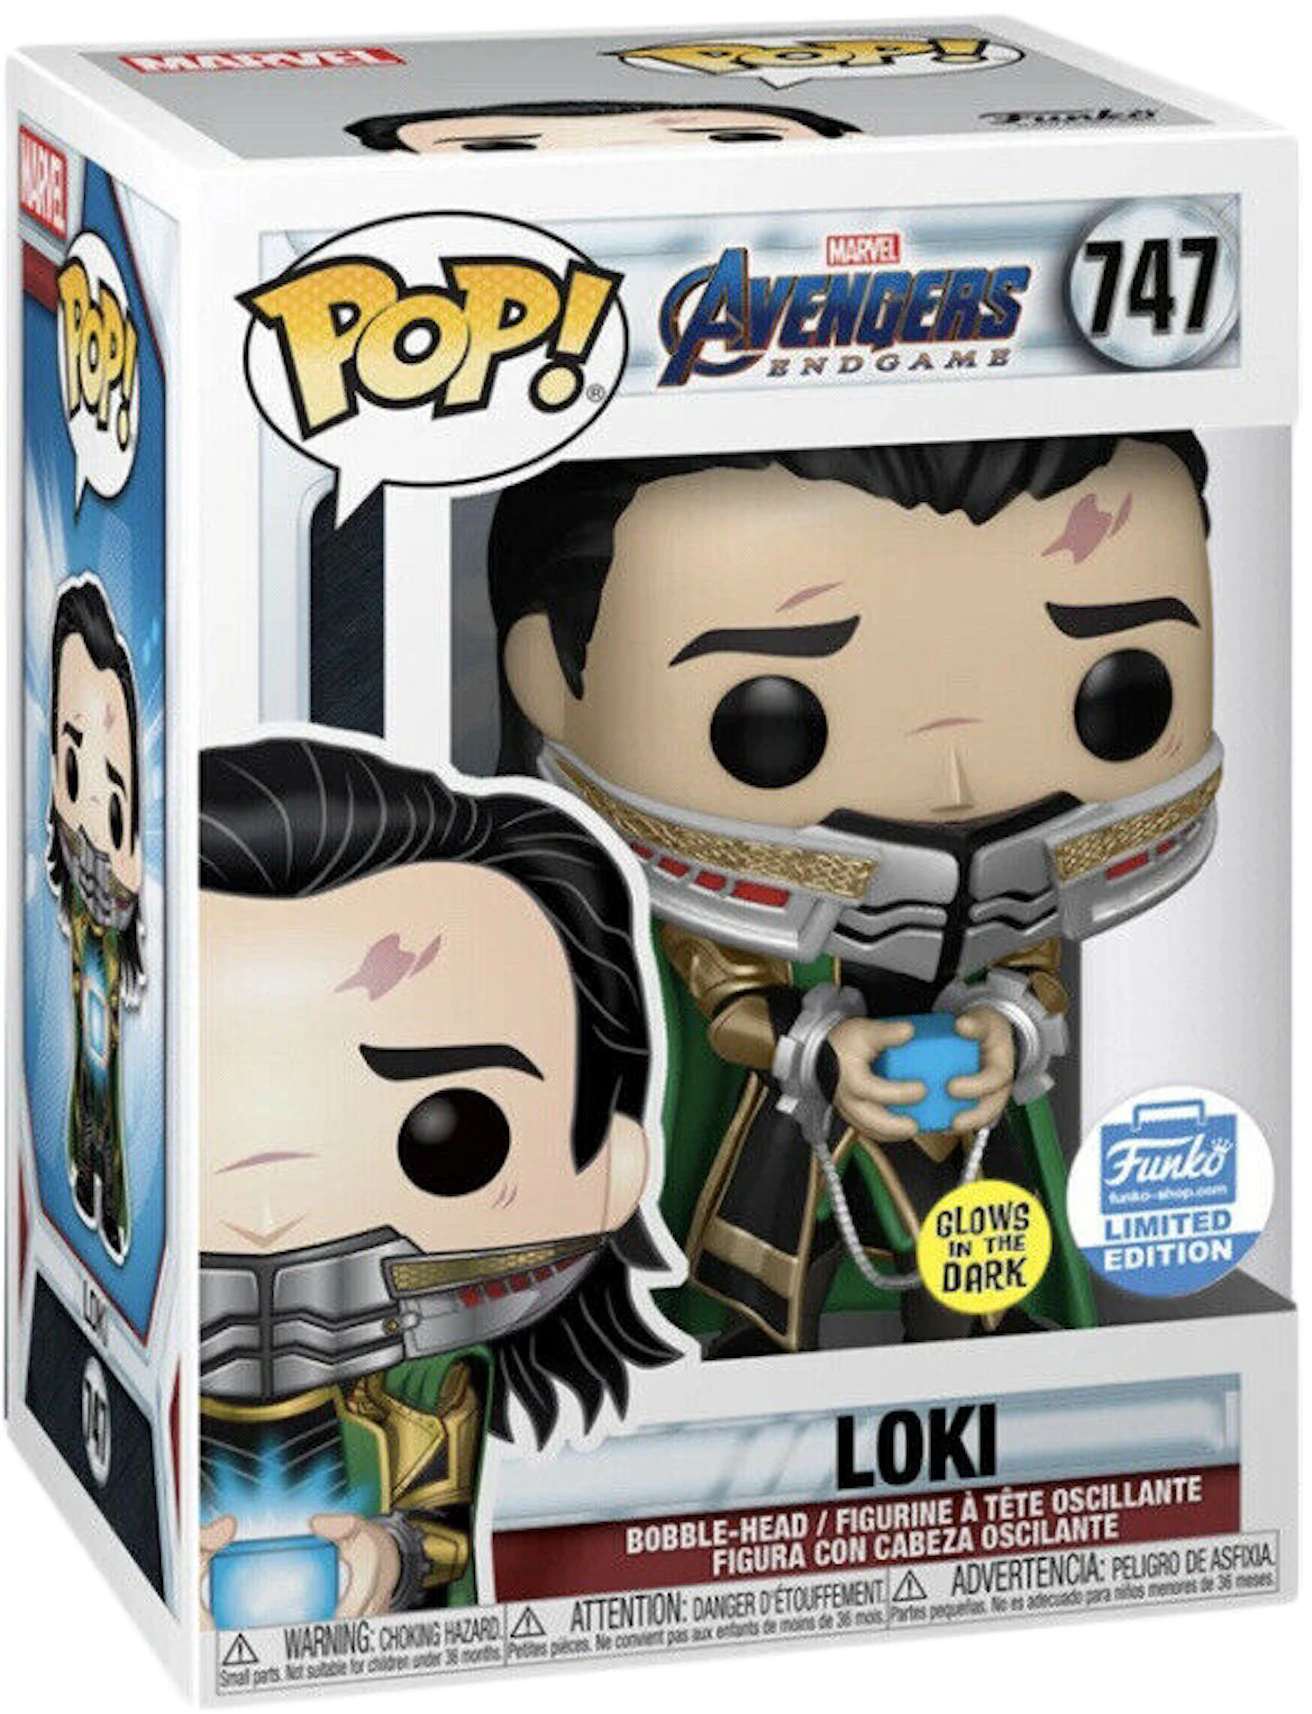 Marco Polo terugtrekken Land Funko Pop! Marvel Avengers Endgame Loki (With Tessaract) GITD Funko Shop  Exclusive Bobble-Head #747 - US